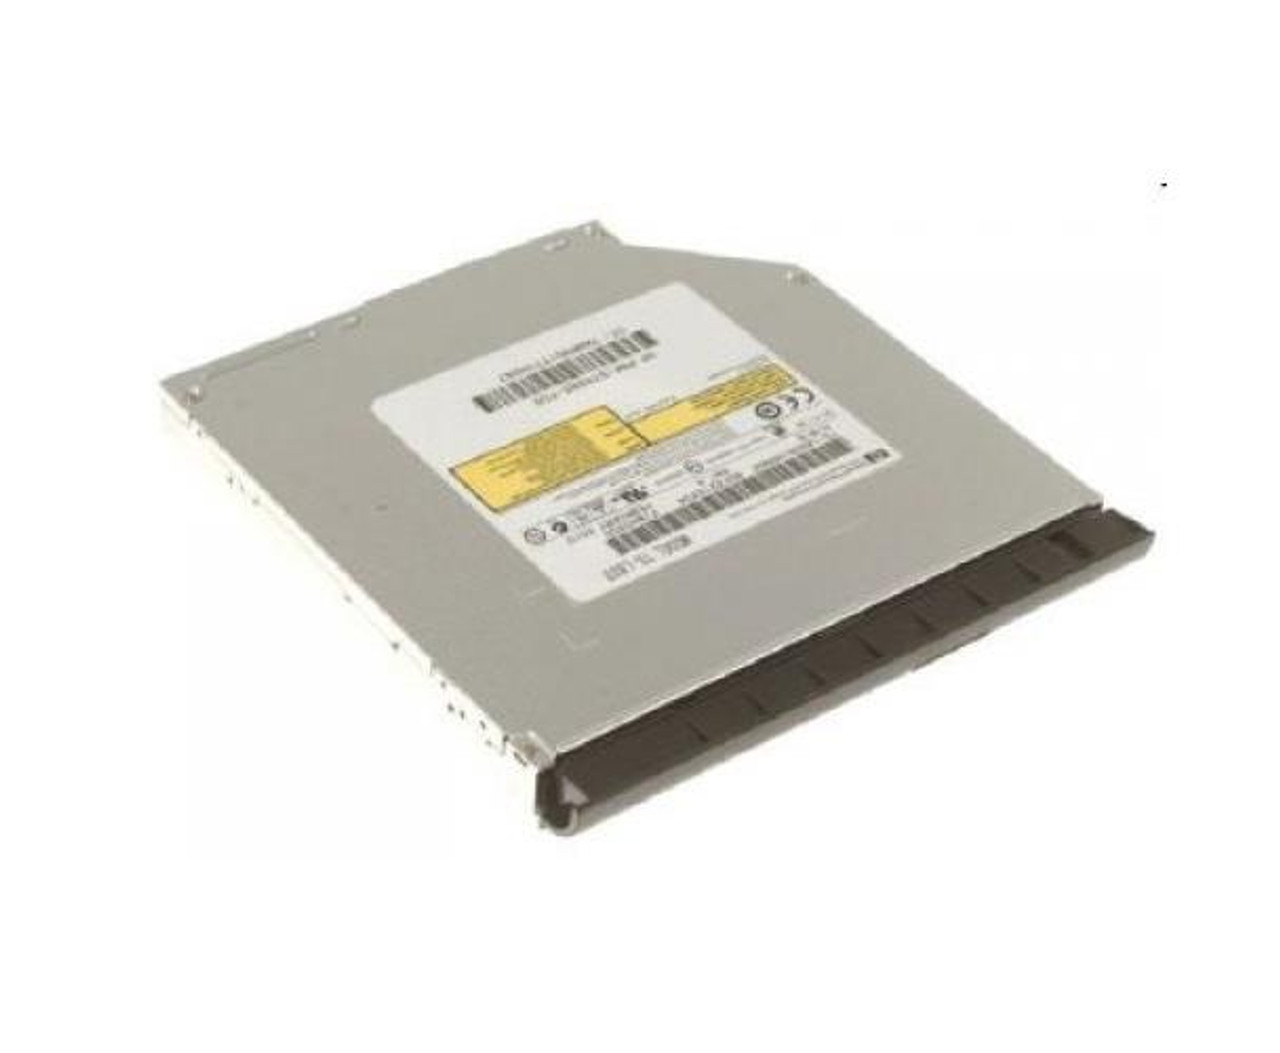 583250-001 - HP DVD-RW/+RW Super Multi Dual Layer Lightscribe SATA Optical Disk Drive